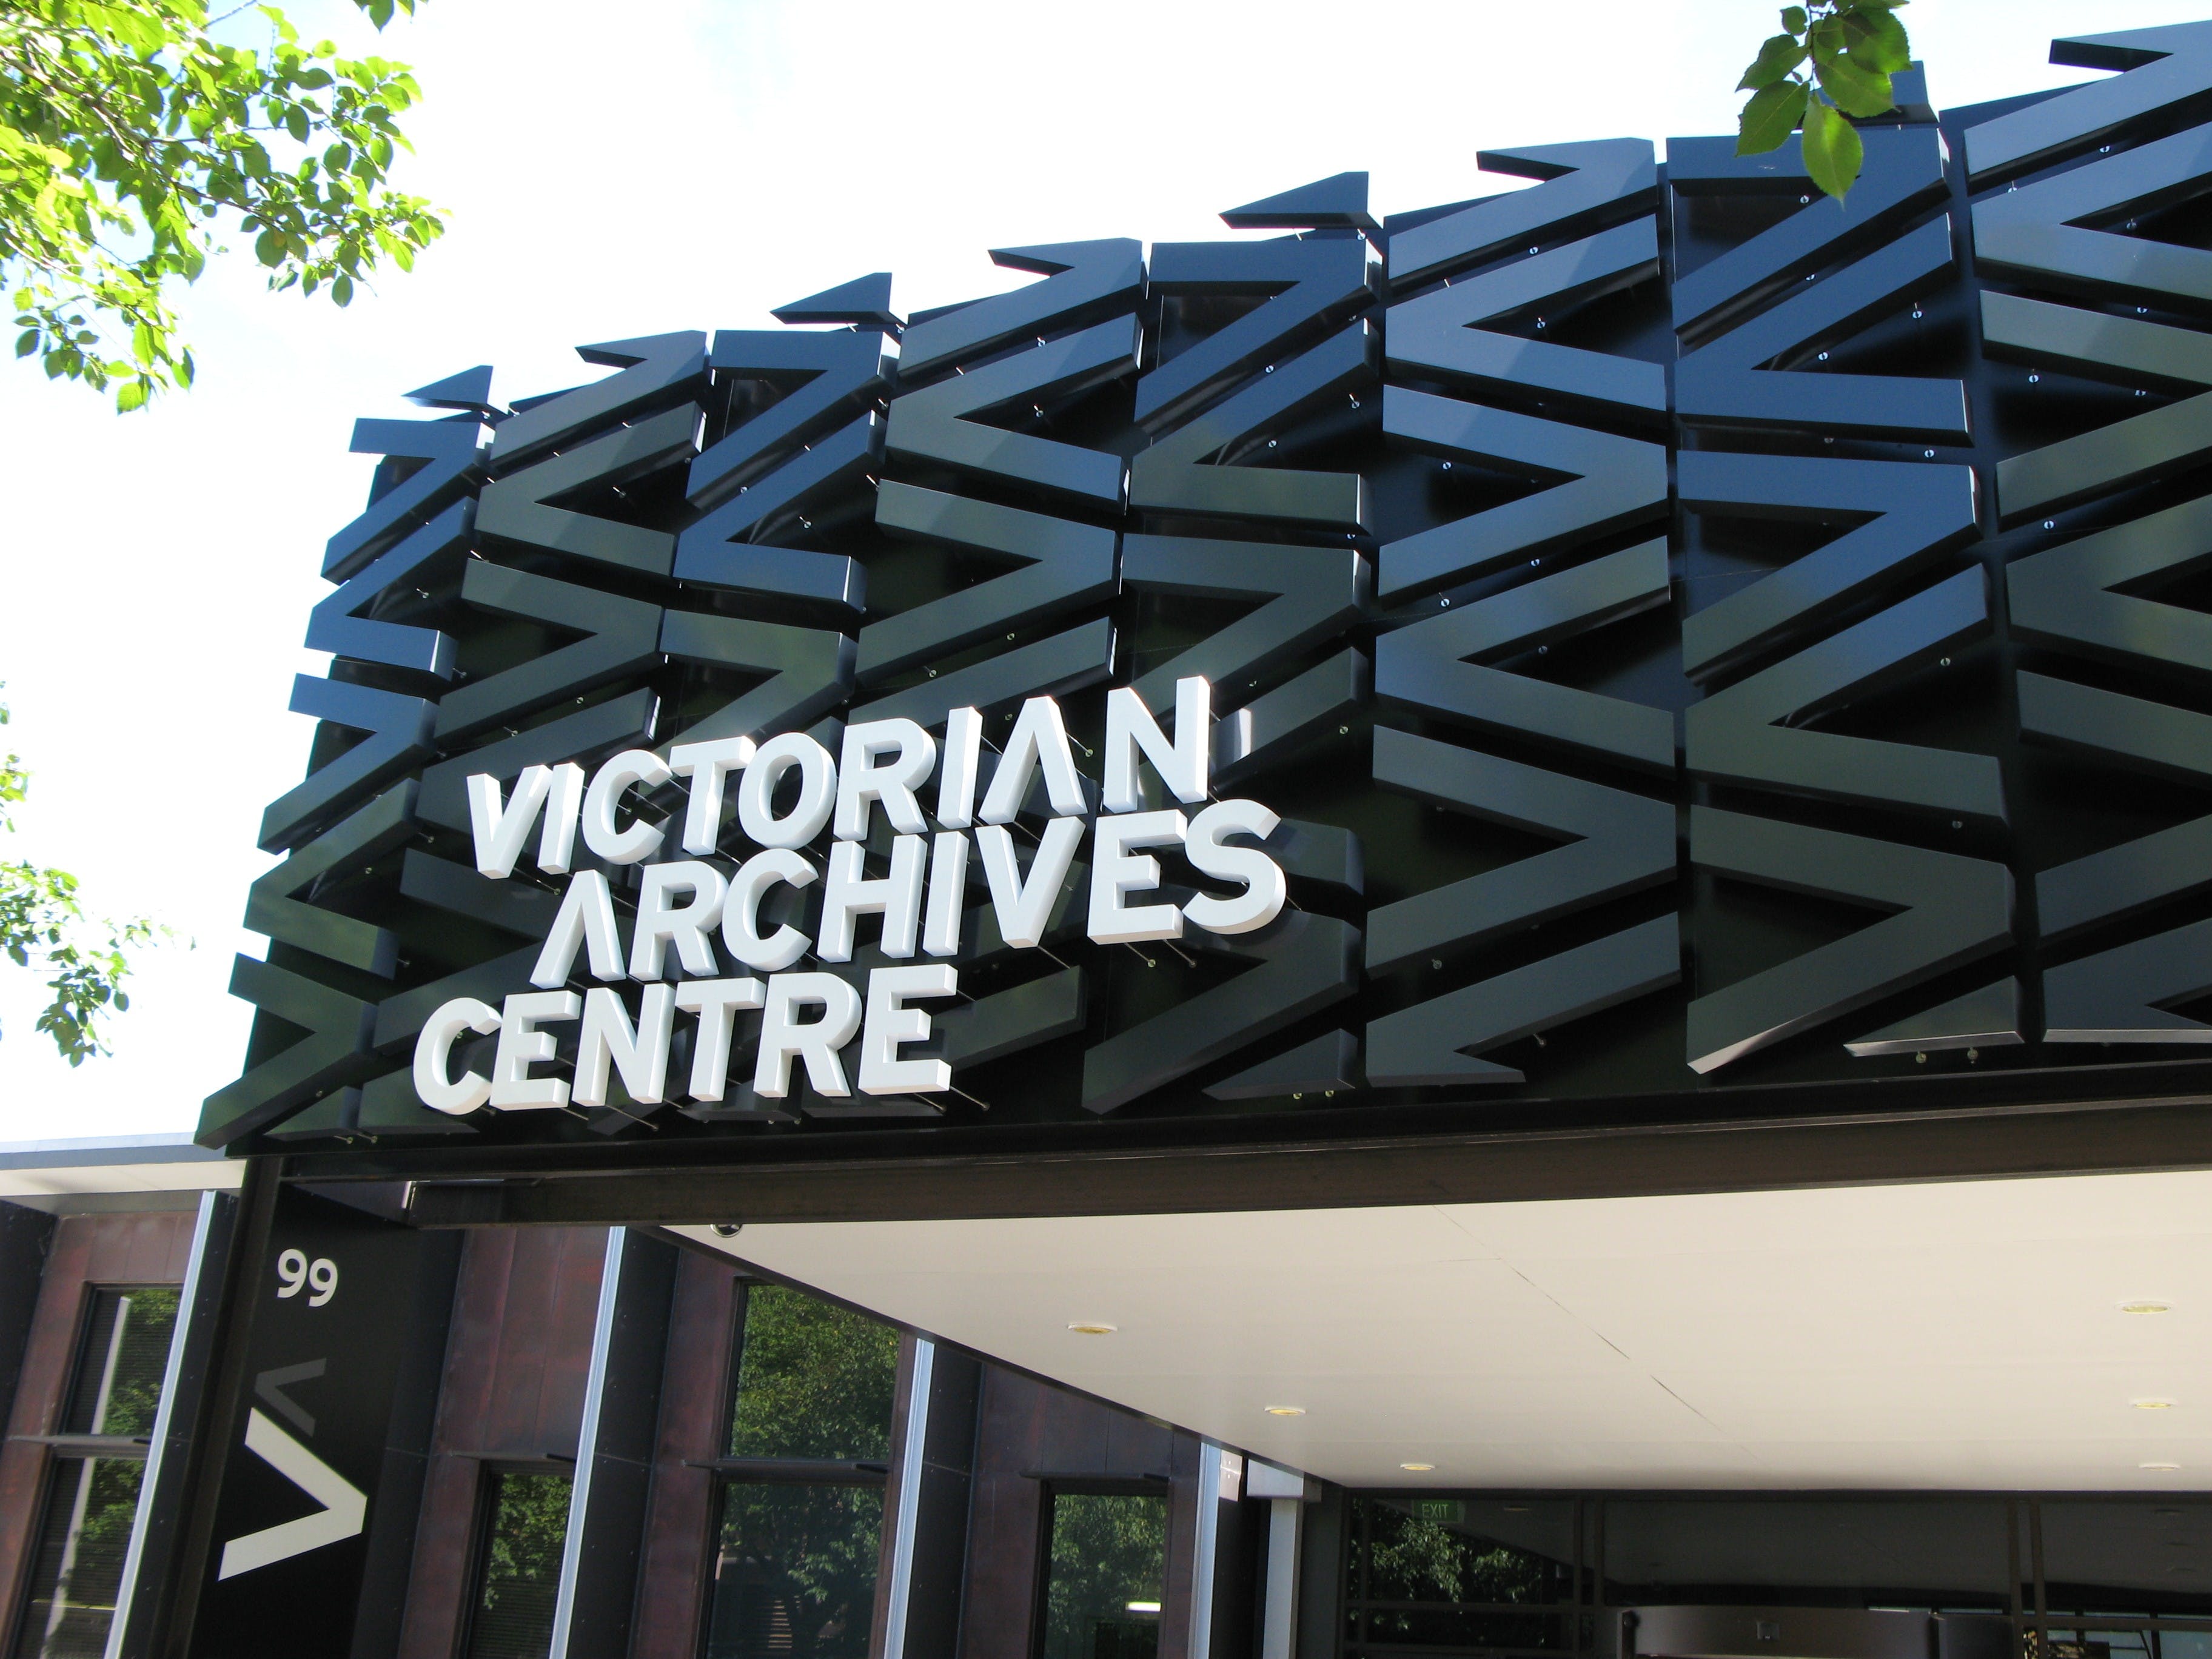 Public Record Office Victoria - Find Attractions